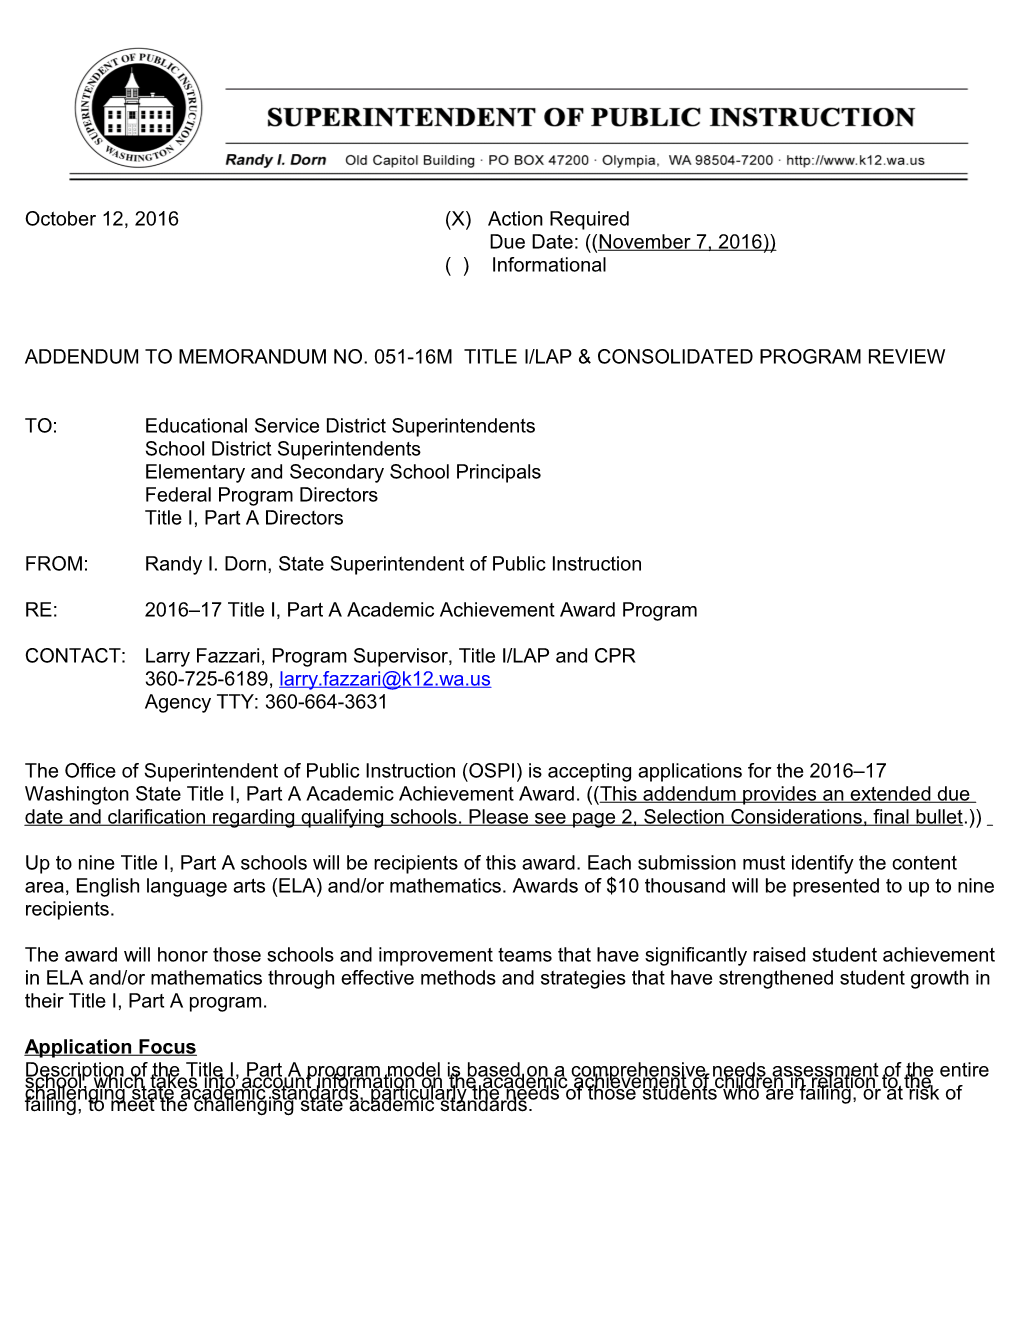 Addendum to Memorandum No. 051-16M Title I/Lap Consolidated Program Review